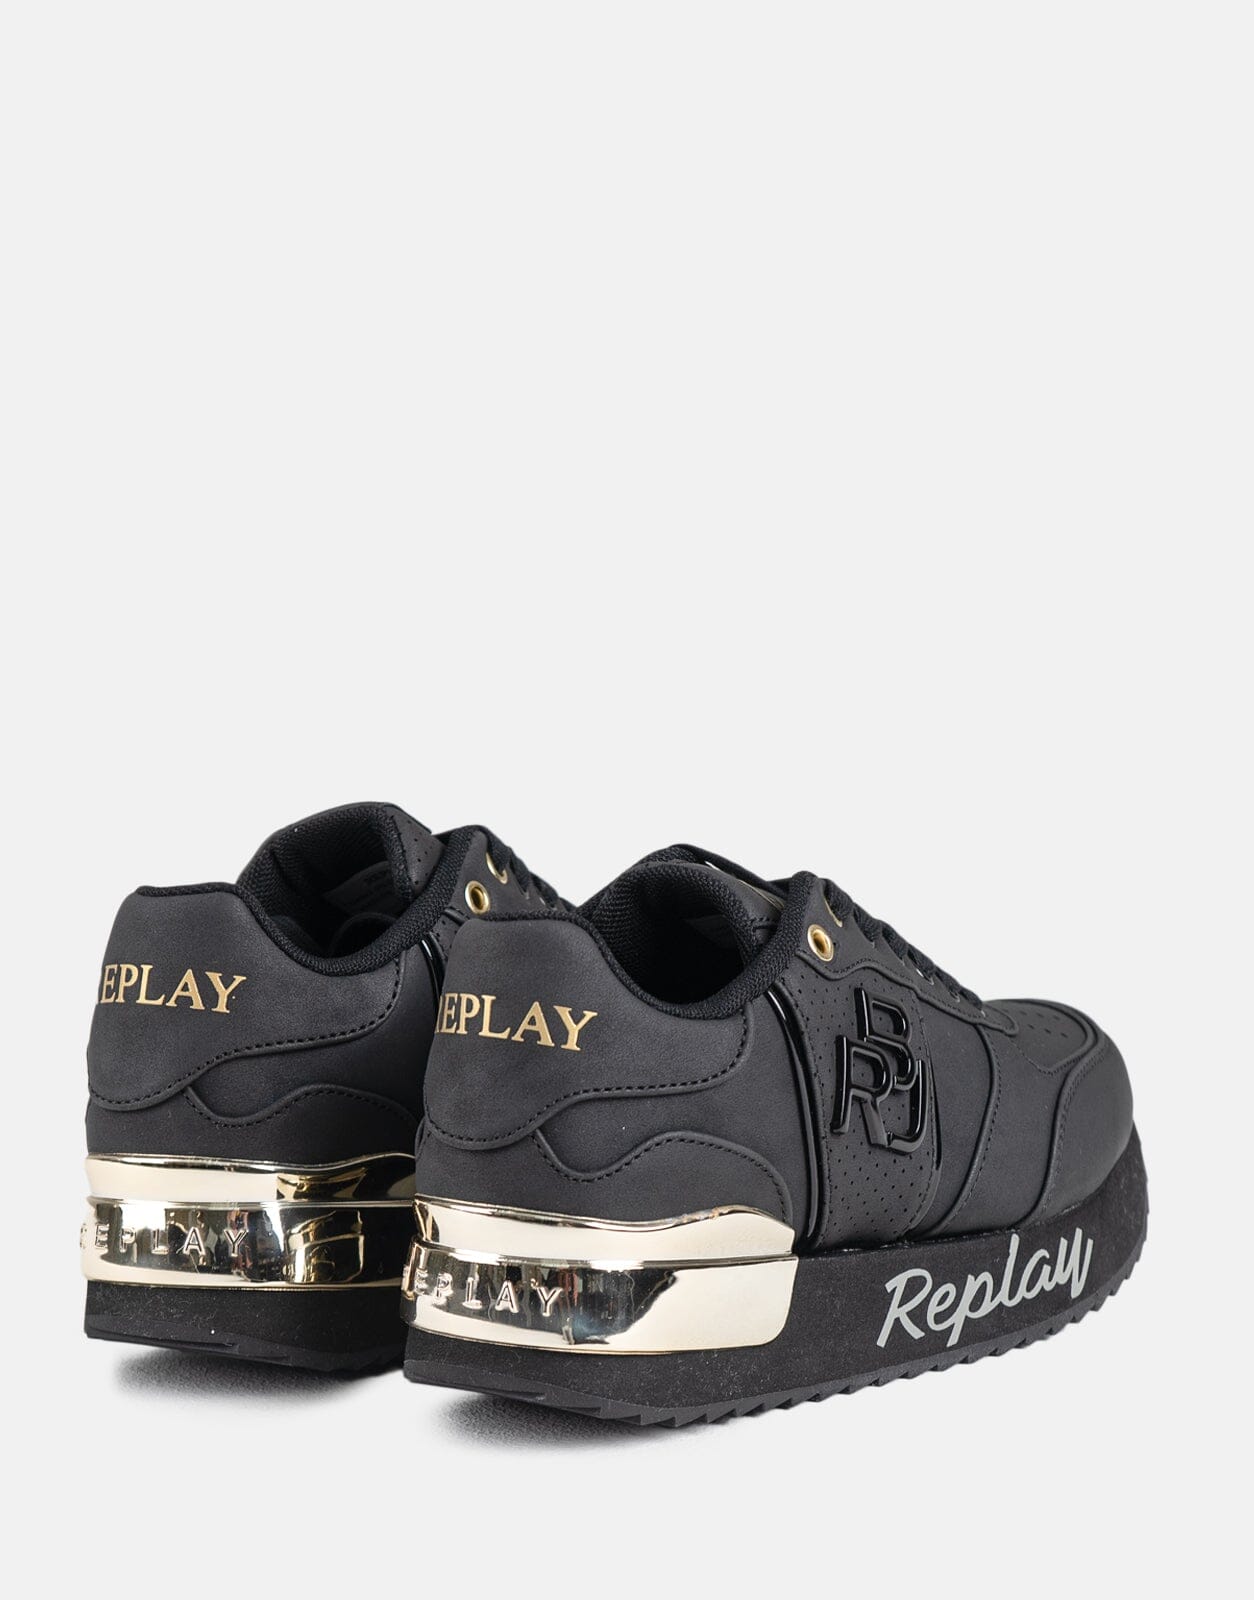 Replay Penny Bloc Sneakers Black - Subwear